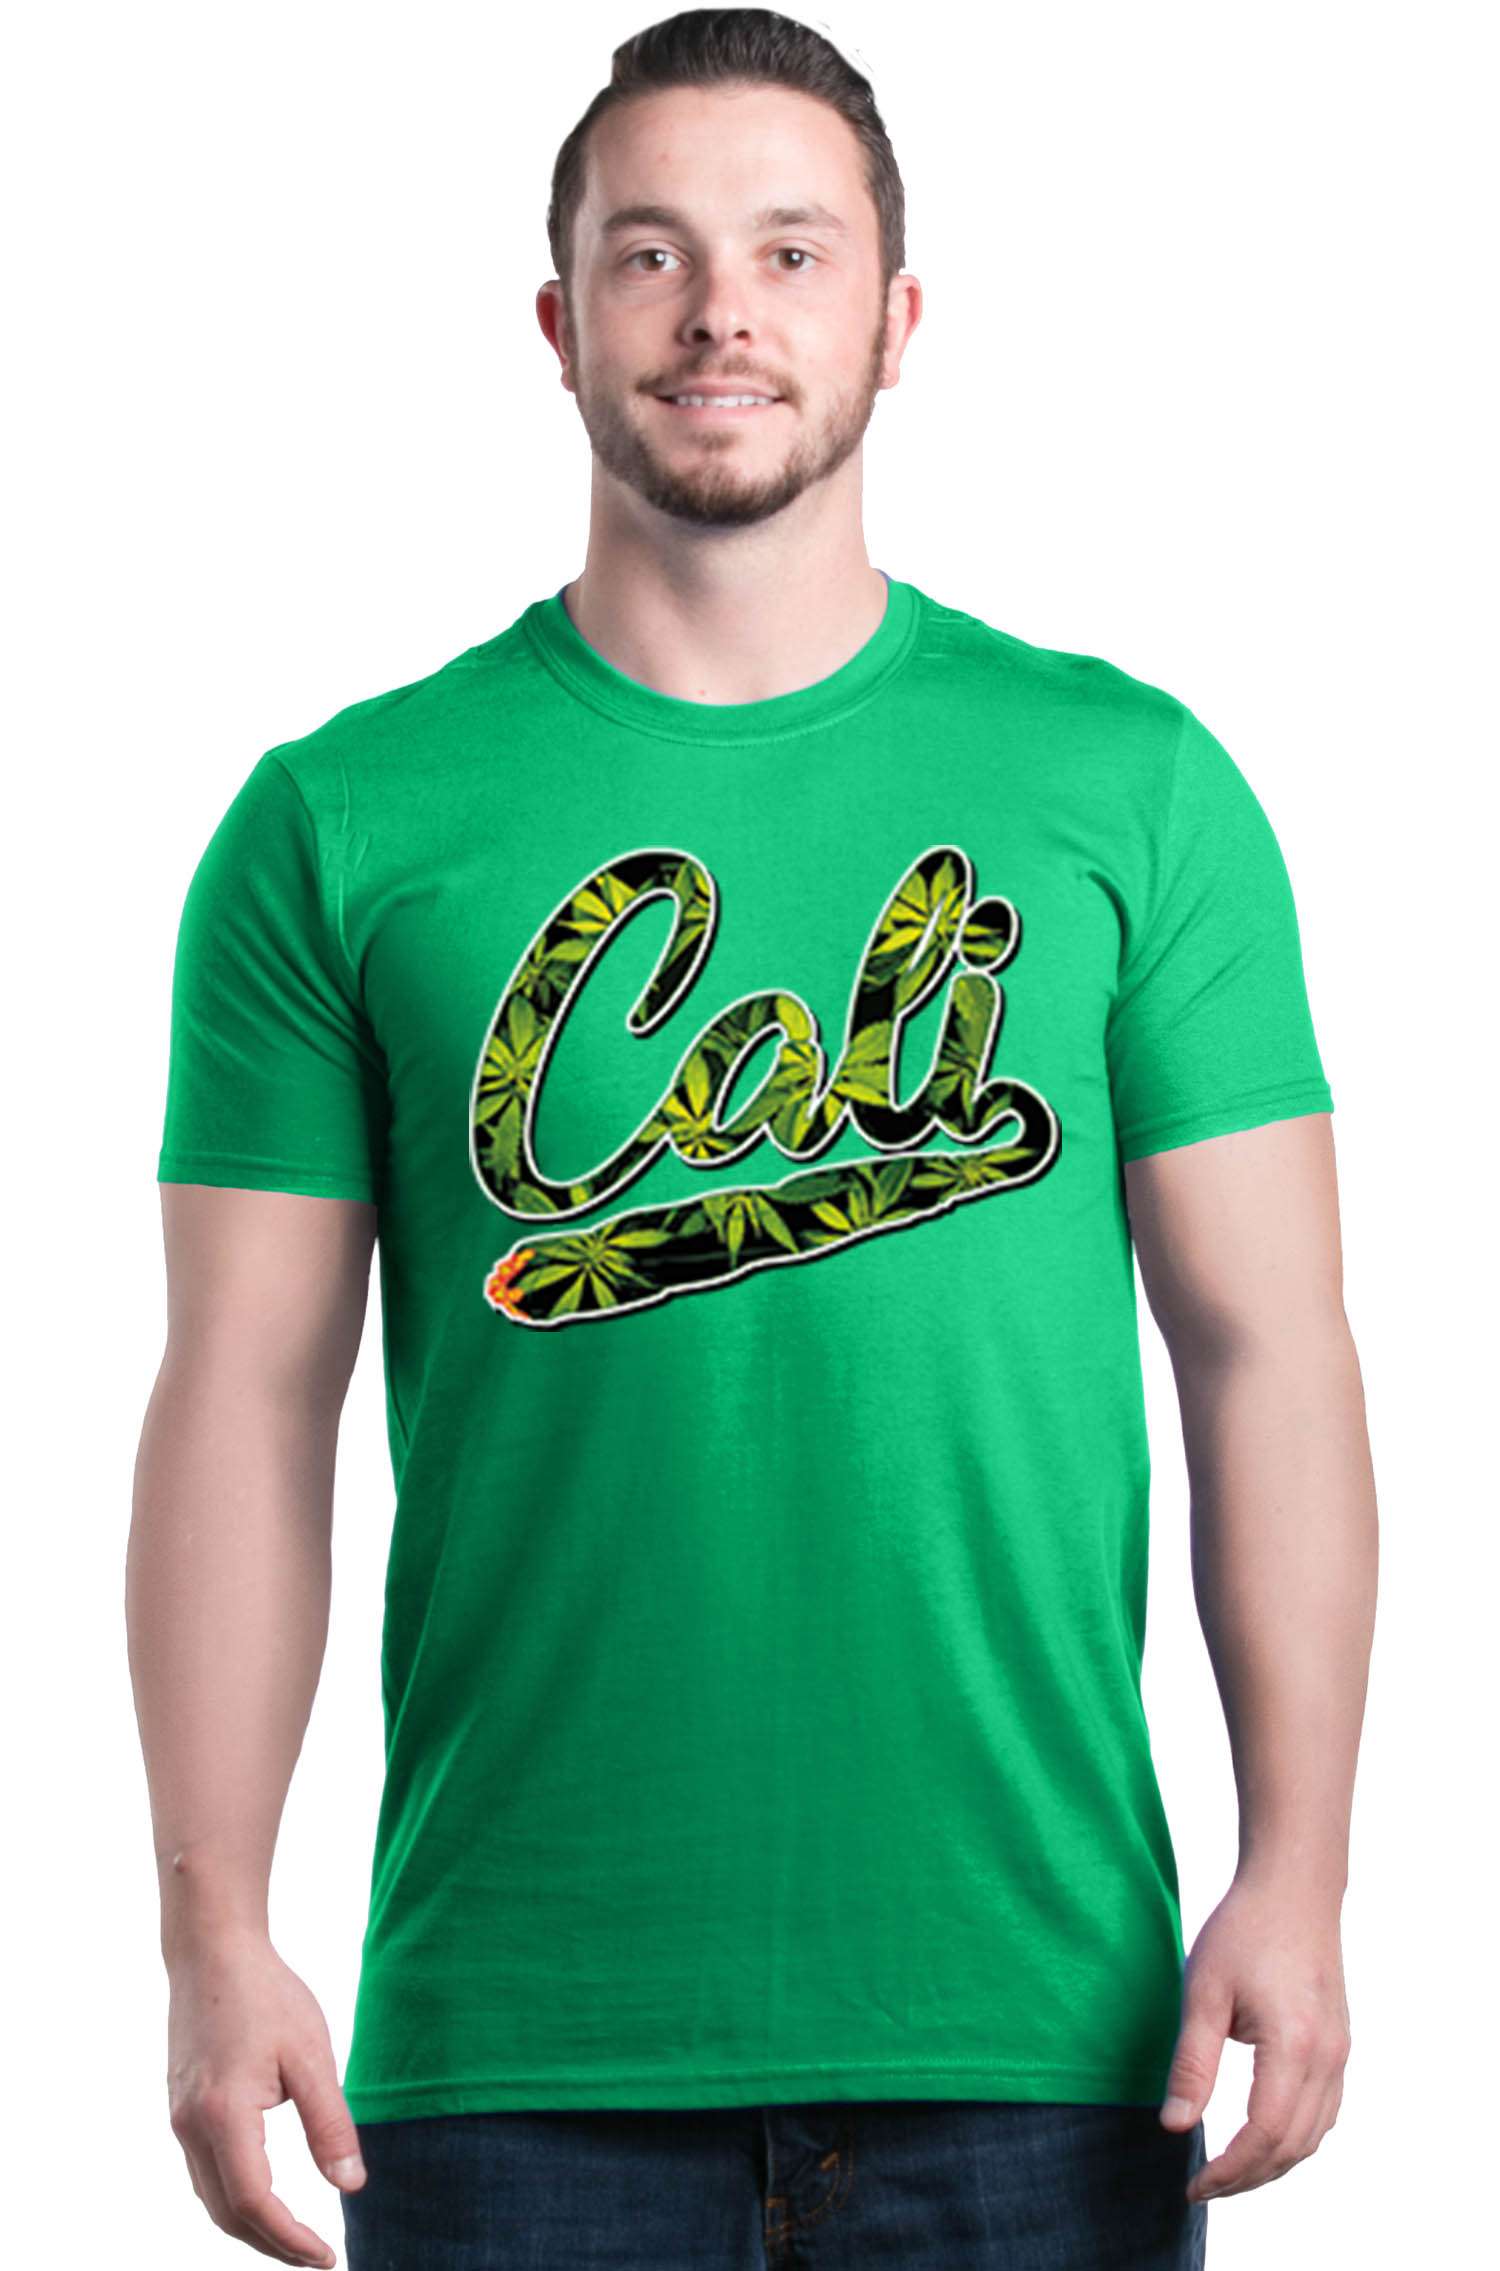 Cali Marijuana Leaf Blunt T-shirt 420 Pot Leaf Weed Kush Shirts | eBay